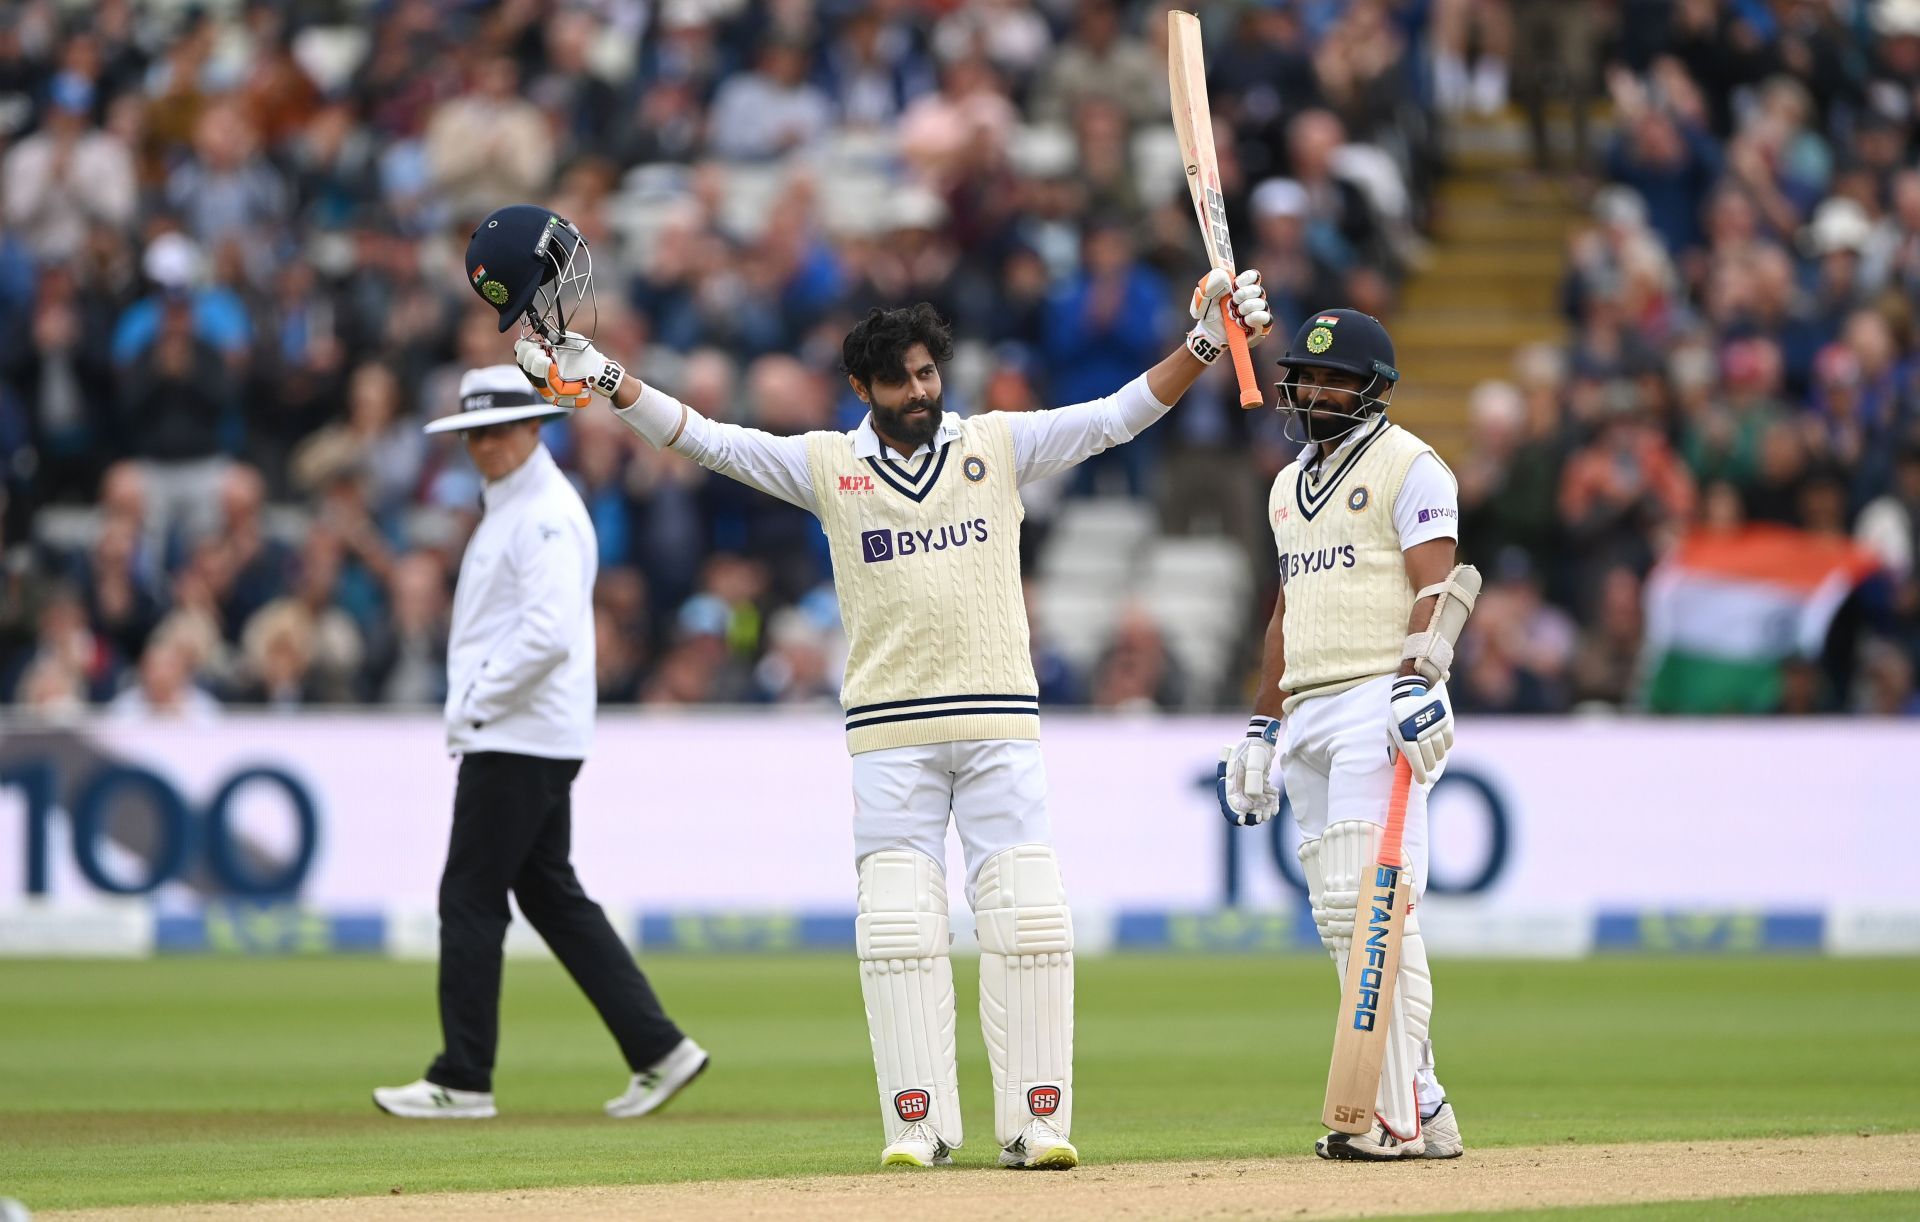 Ravindra Jadeja scored his first Test century away from home